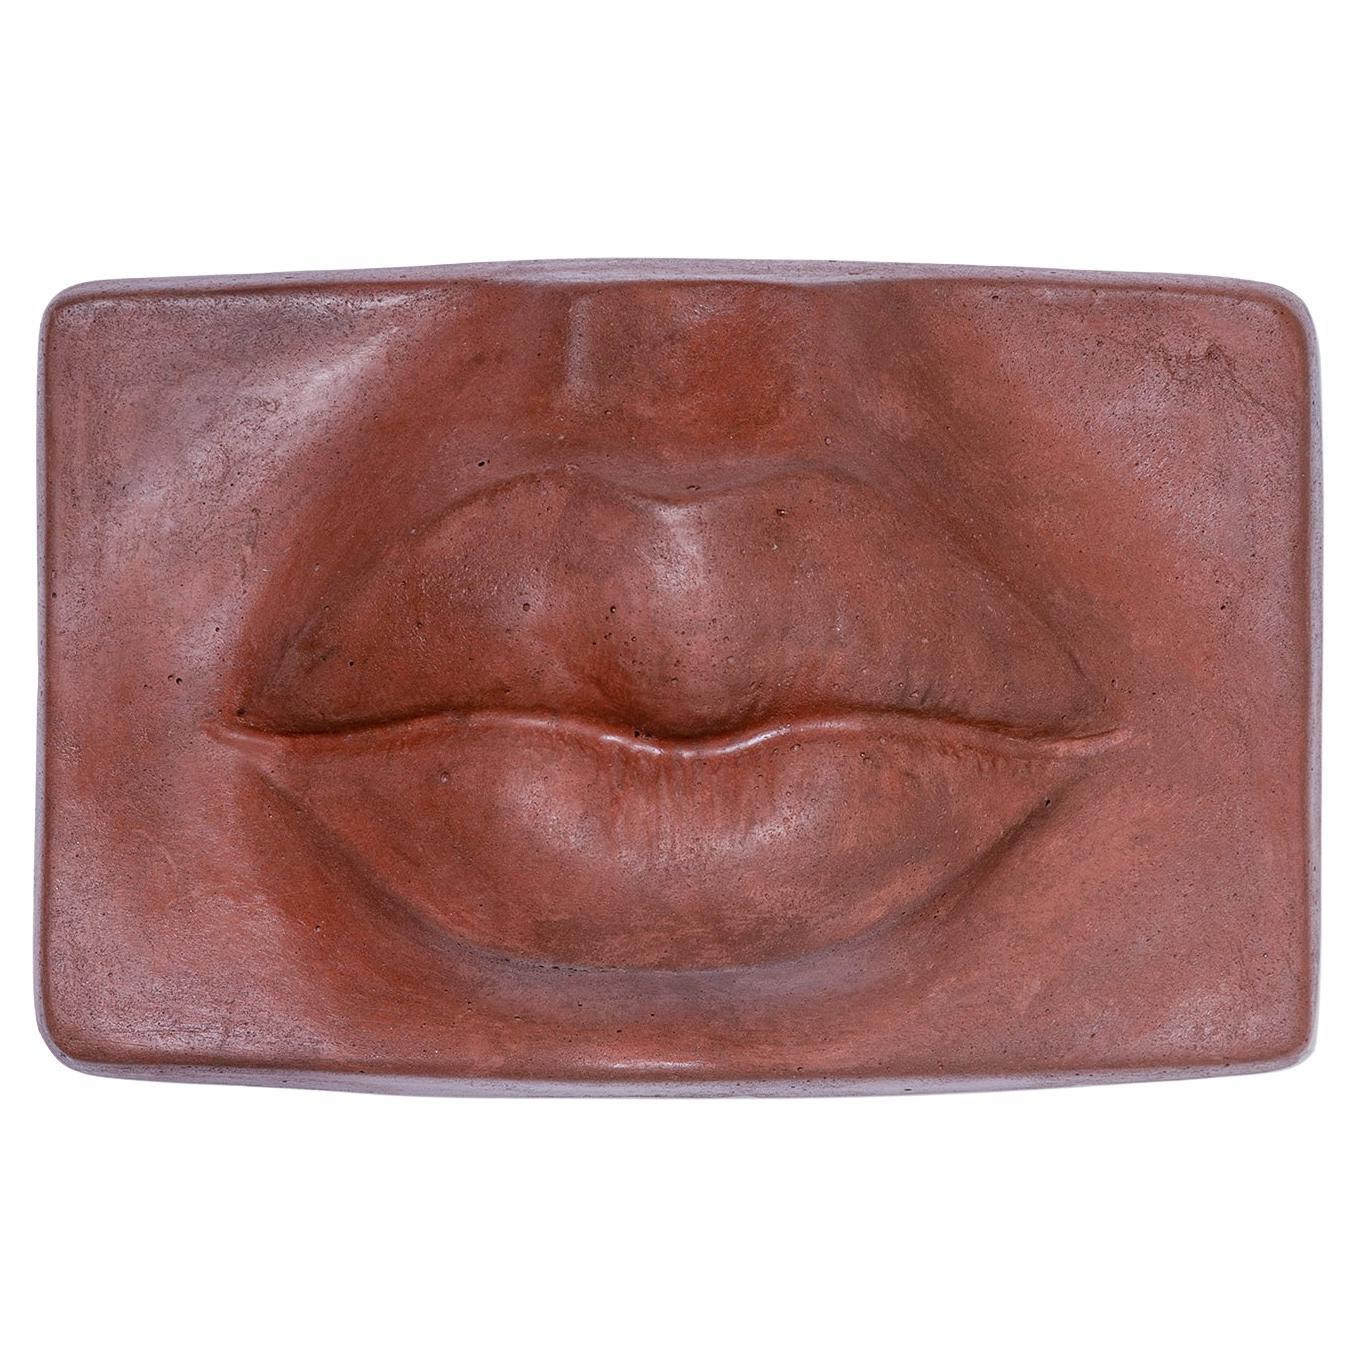 Lips Rigel Sculpture For Sale